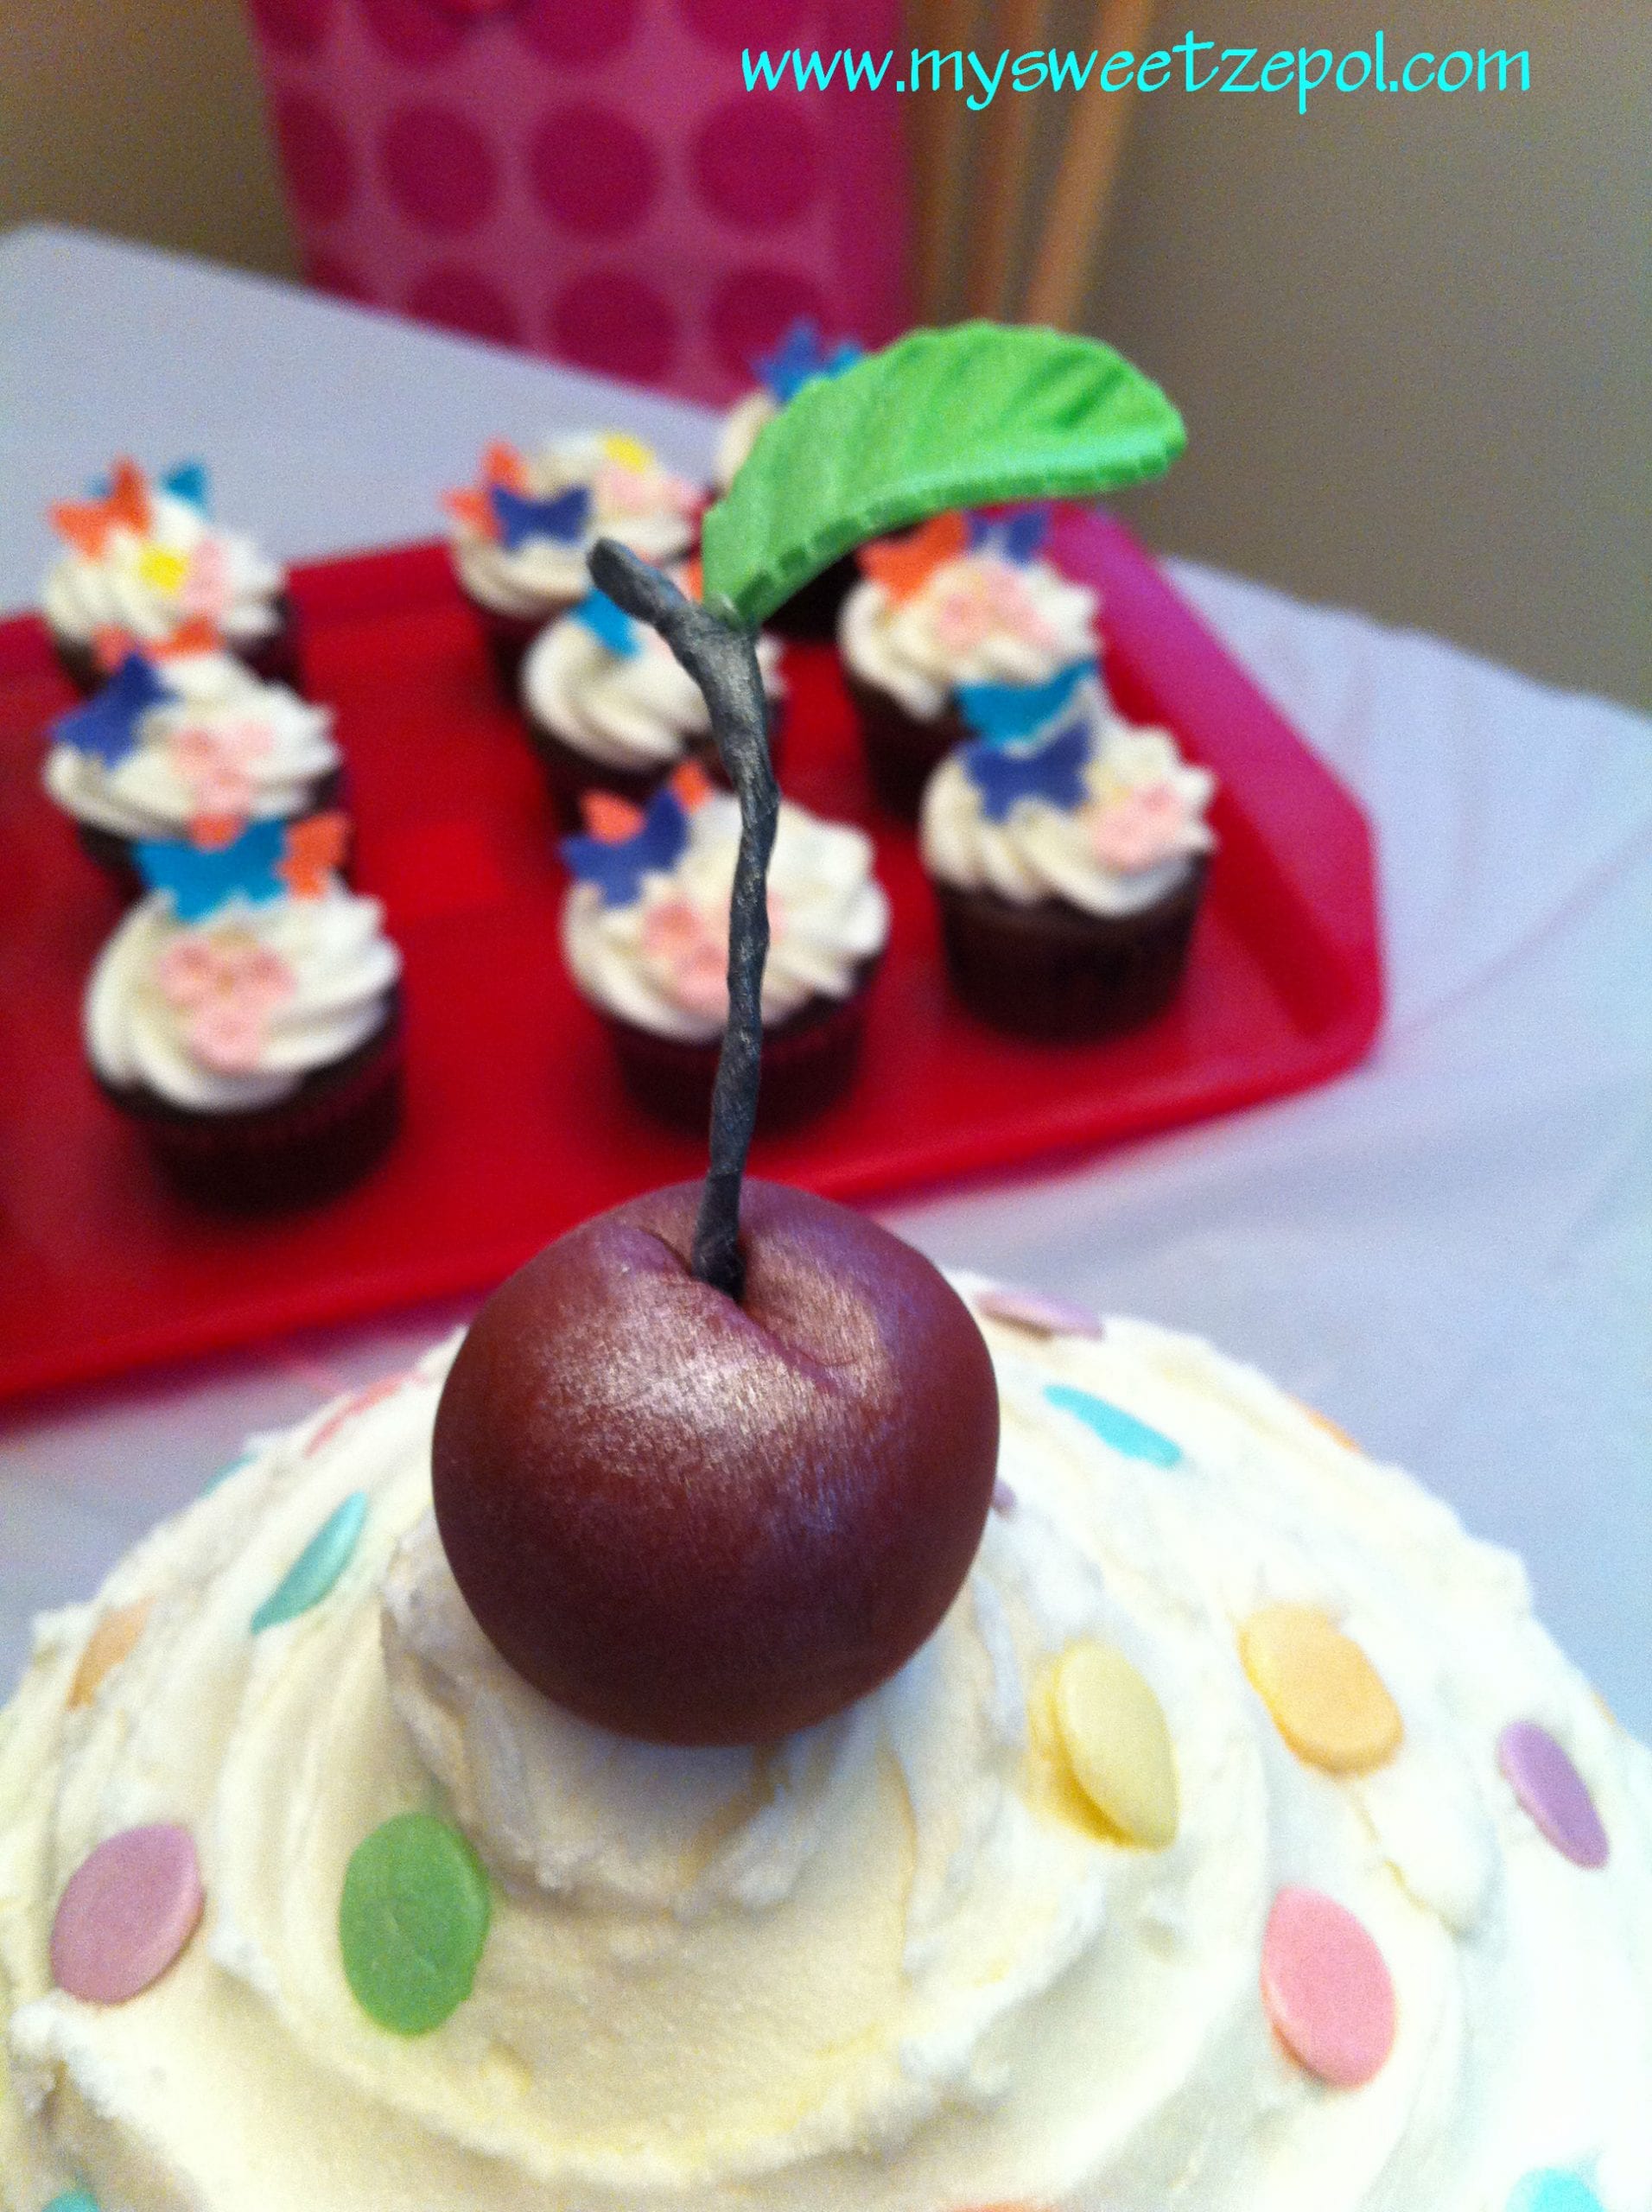 Cherry close-up on a big cupcake birthday cake